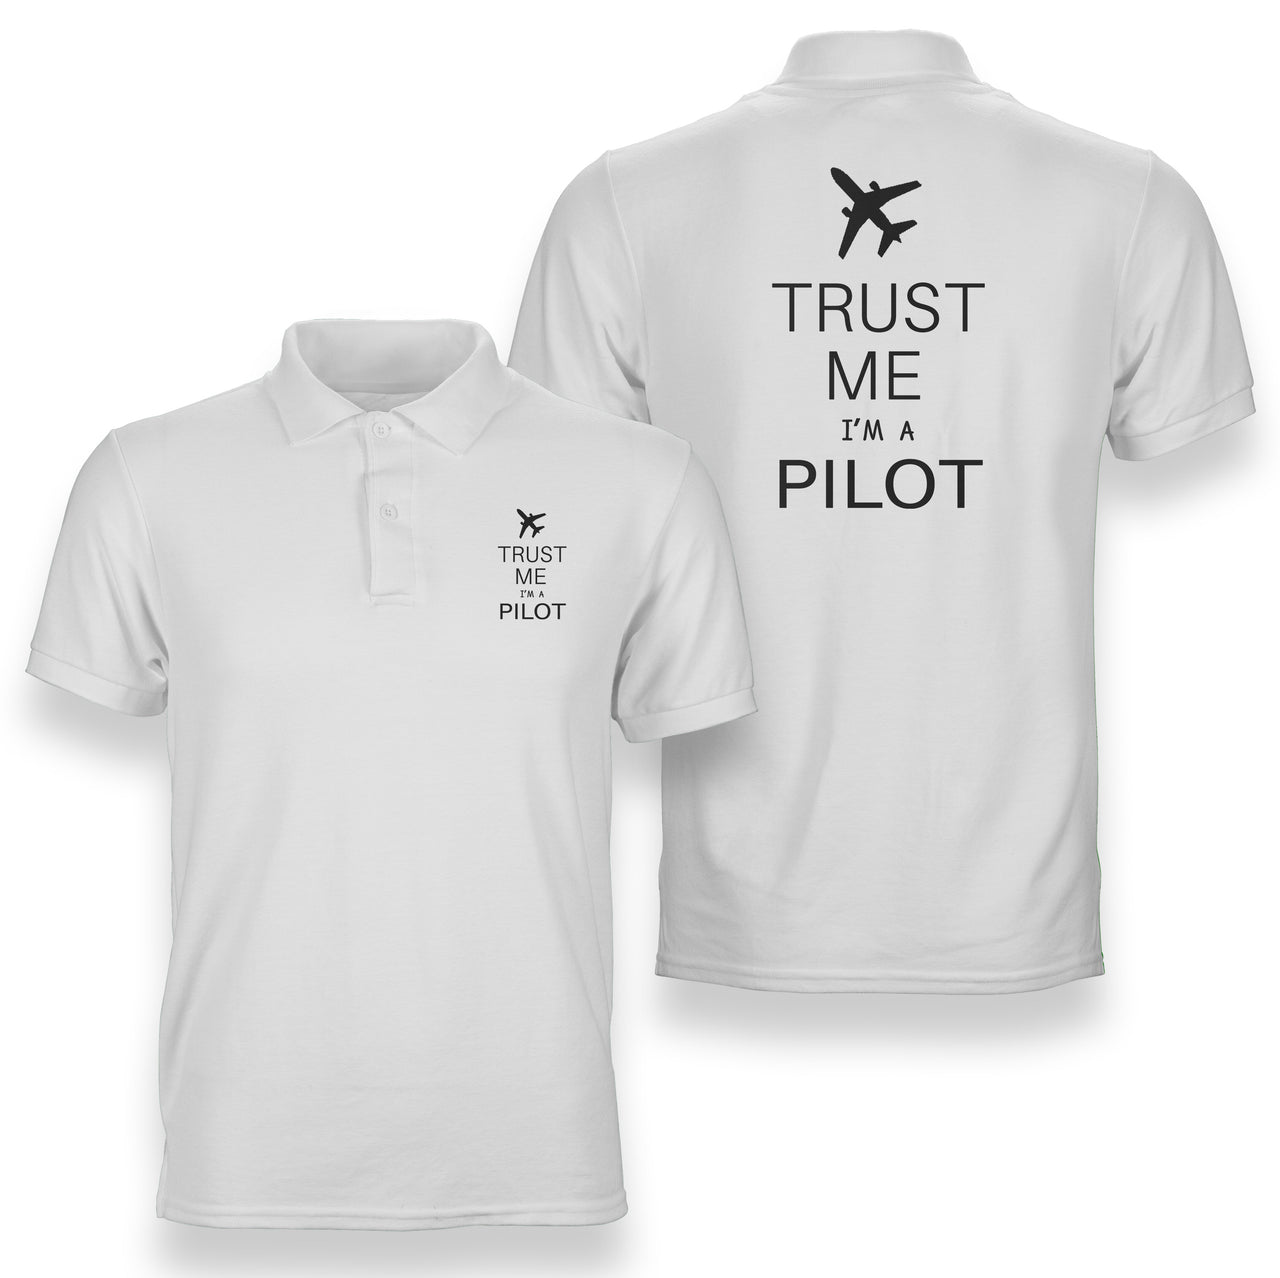 Trust Me I'm a Pilot 2 Designed Double Side Polo T-Shirts